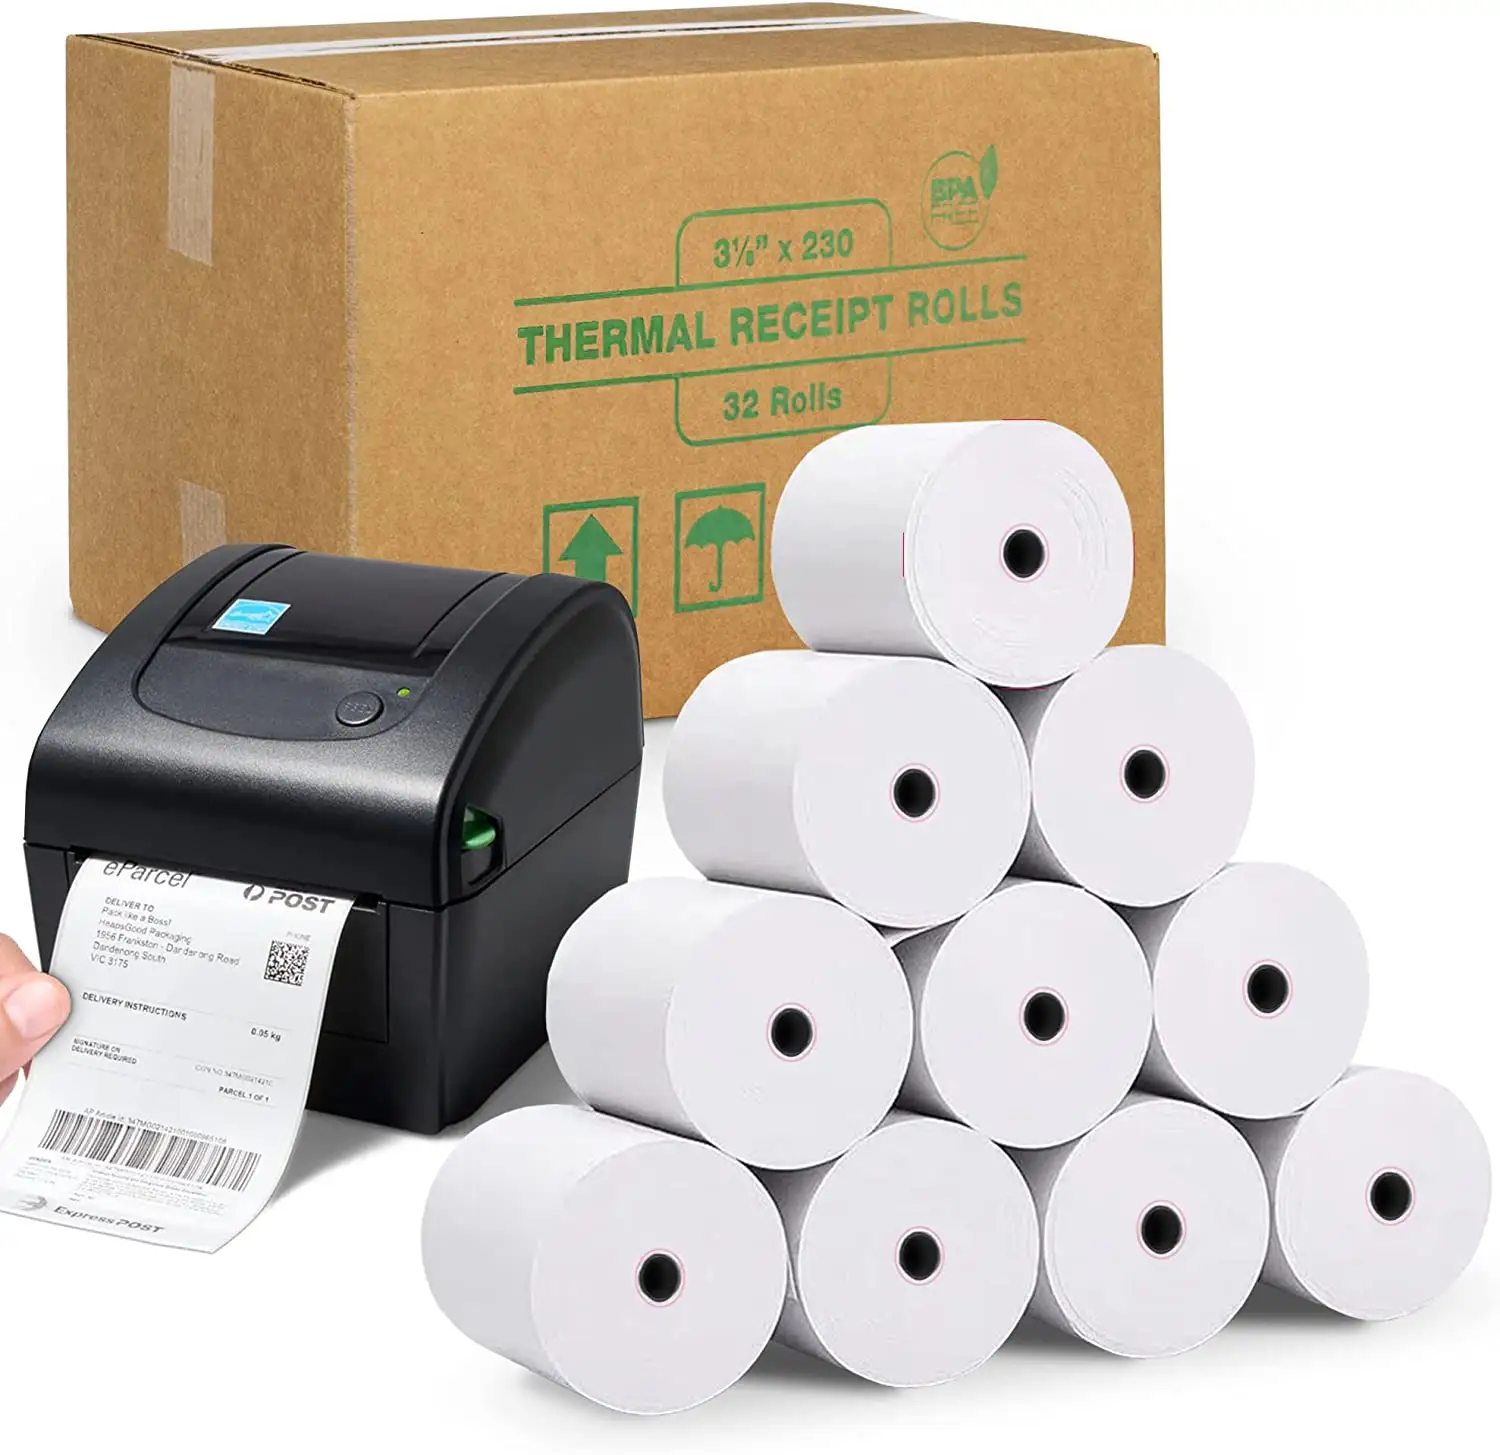 Wholesale Roll 57mm X 80mm 80 X 70mm Cash Register Thermal Paper For Pos Printer Thermal Pos Paper Roll